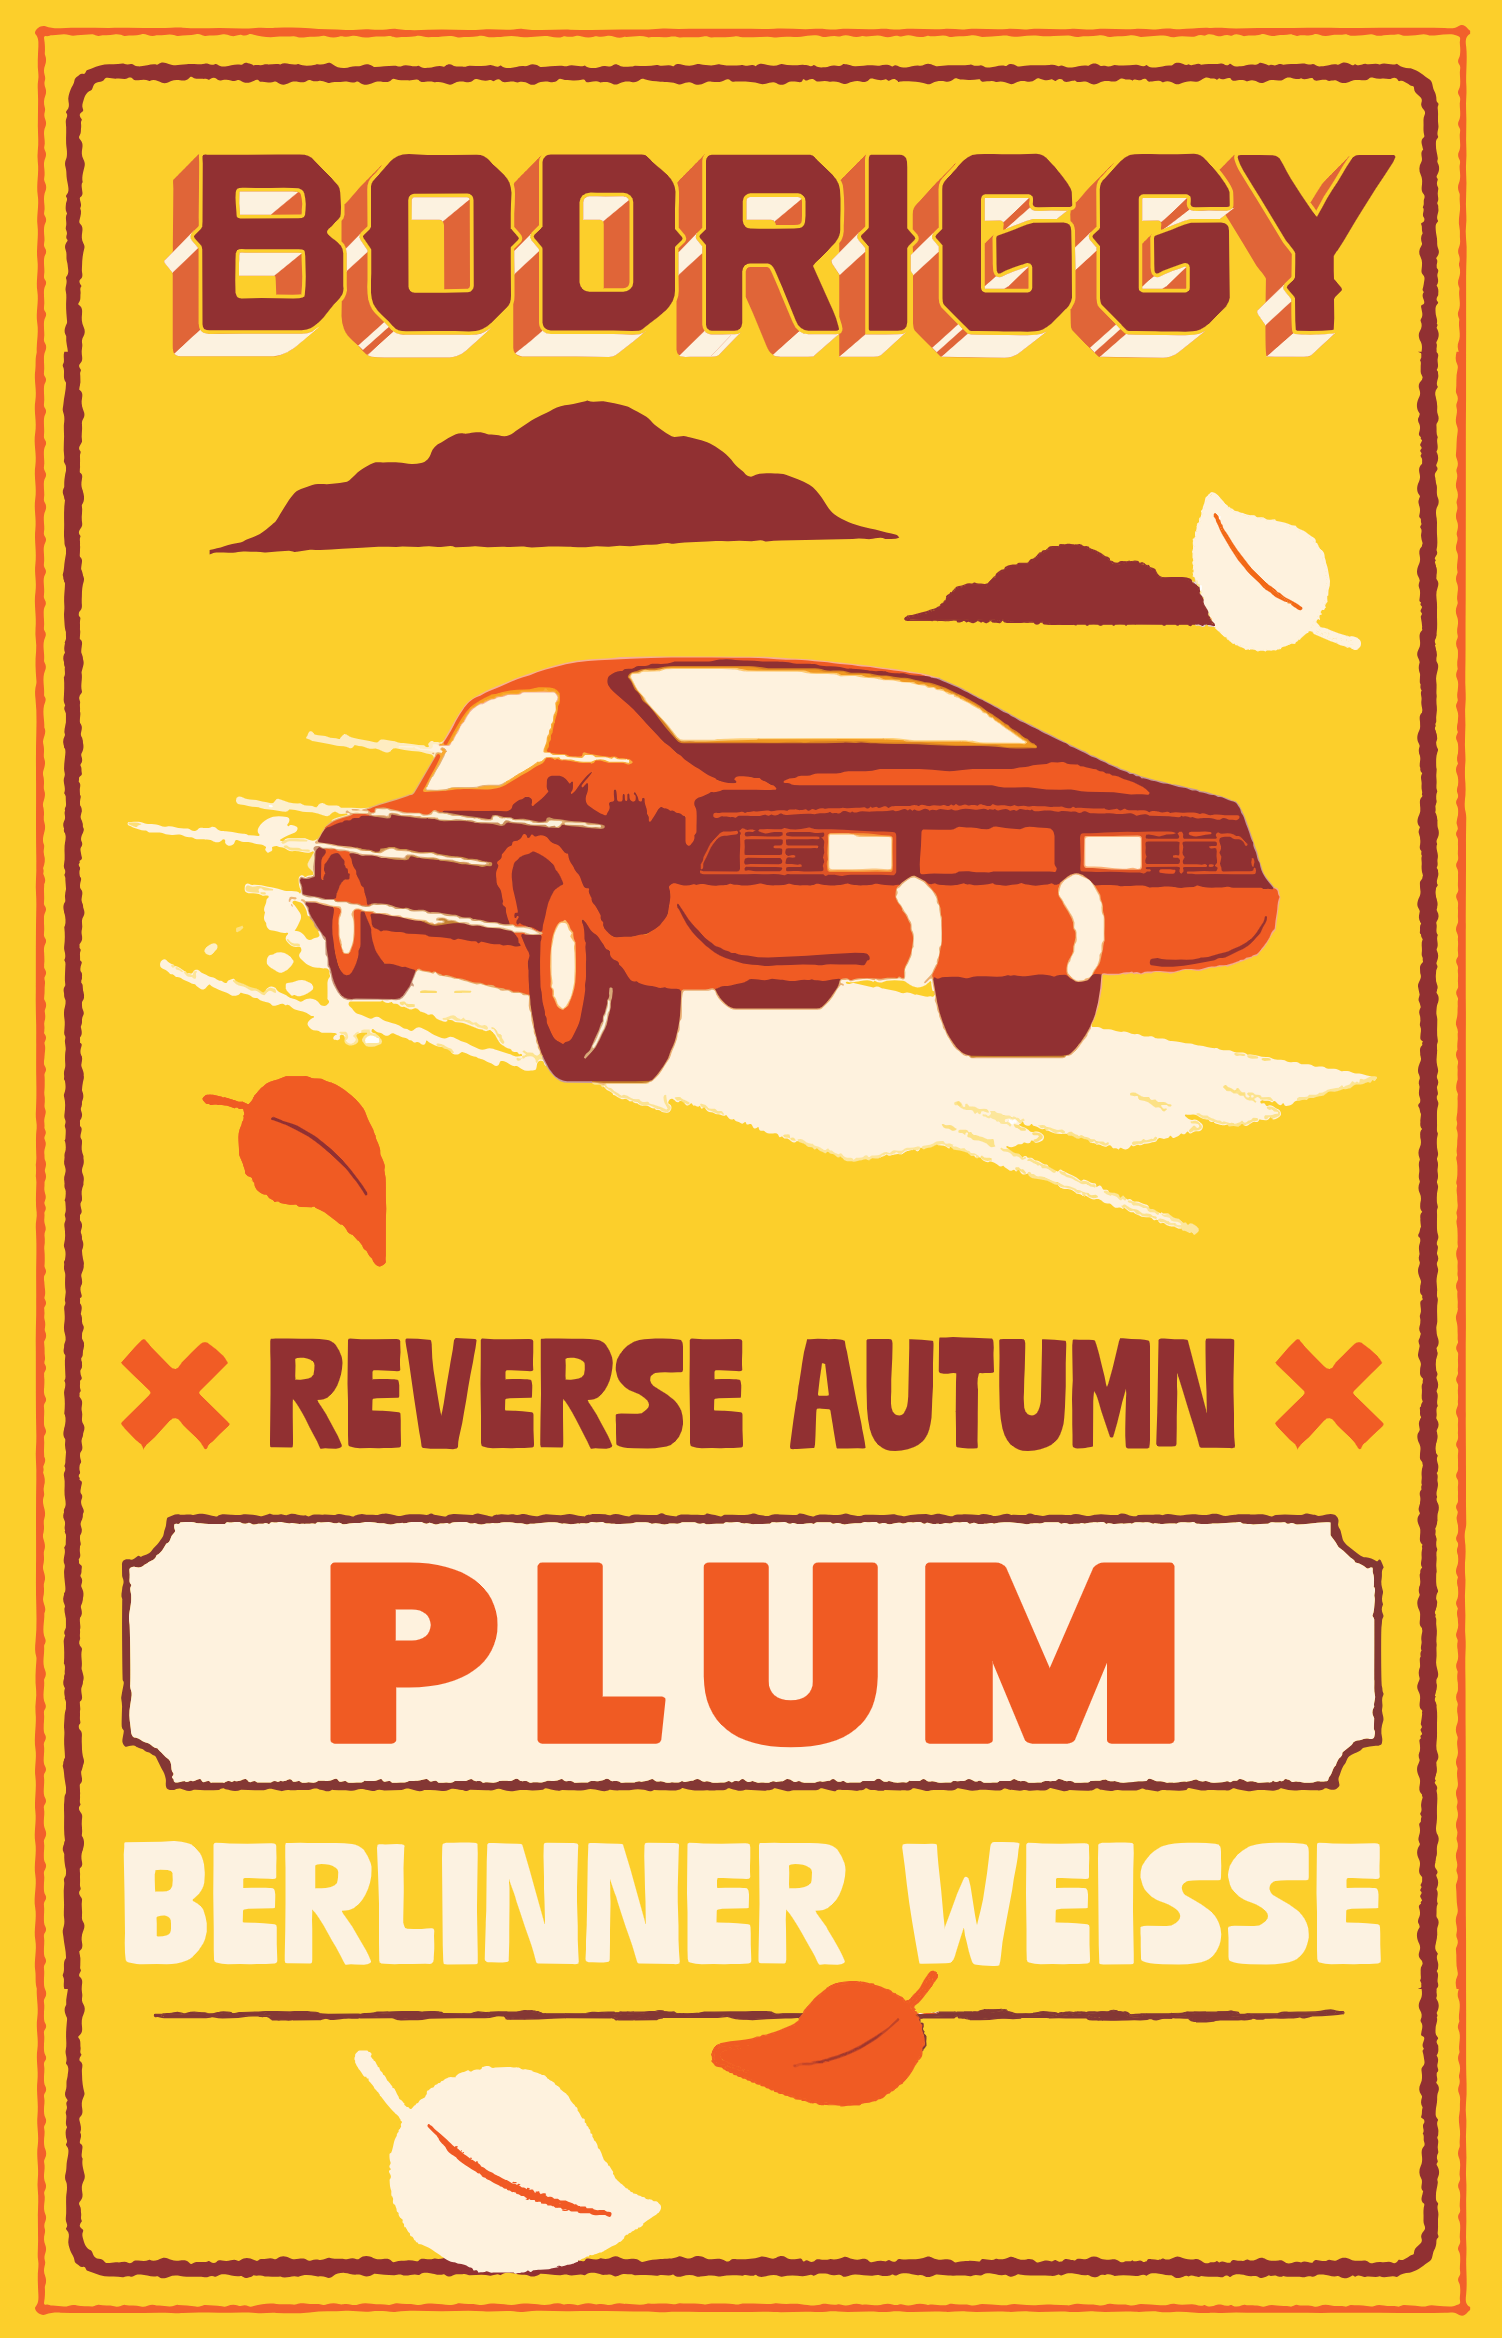 Reverse Autumn - Plum Berlinner Weisse 6%